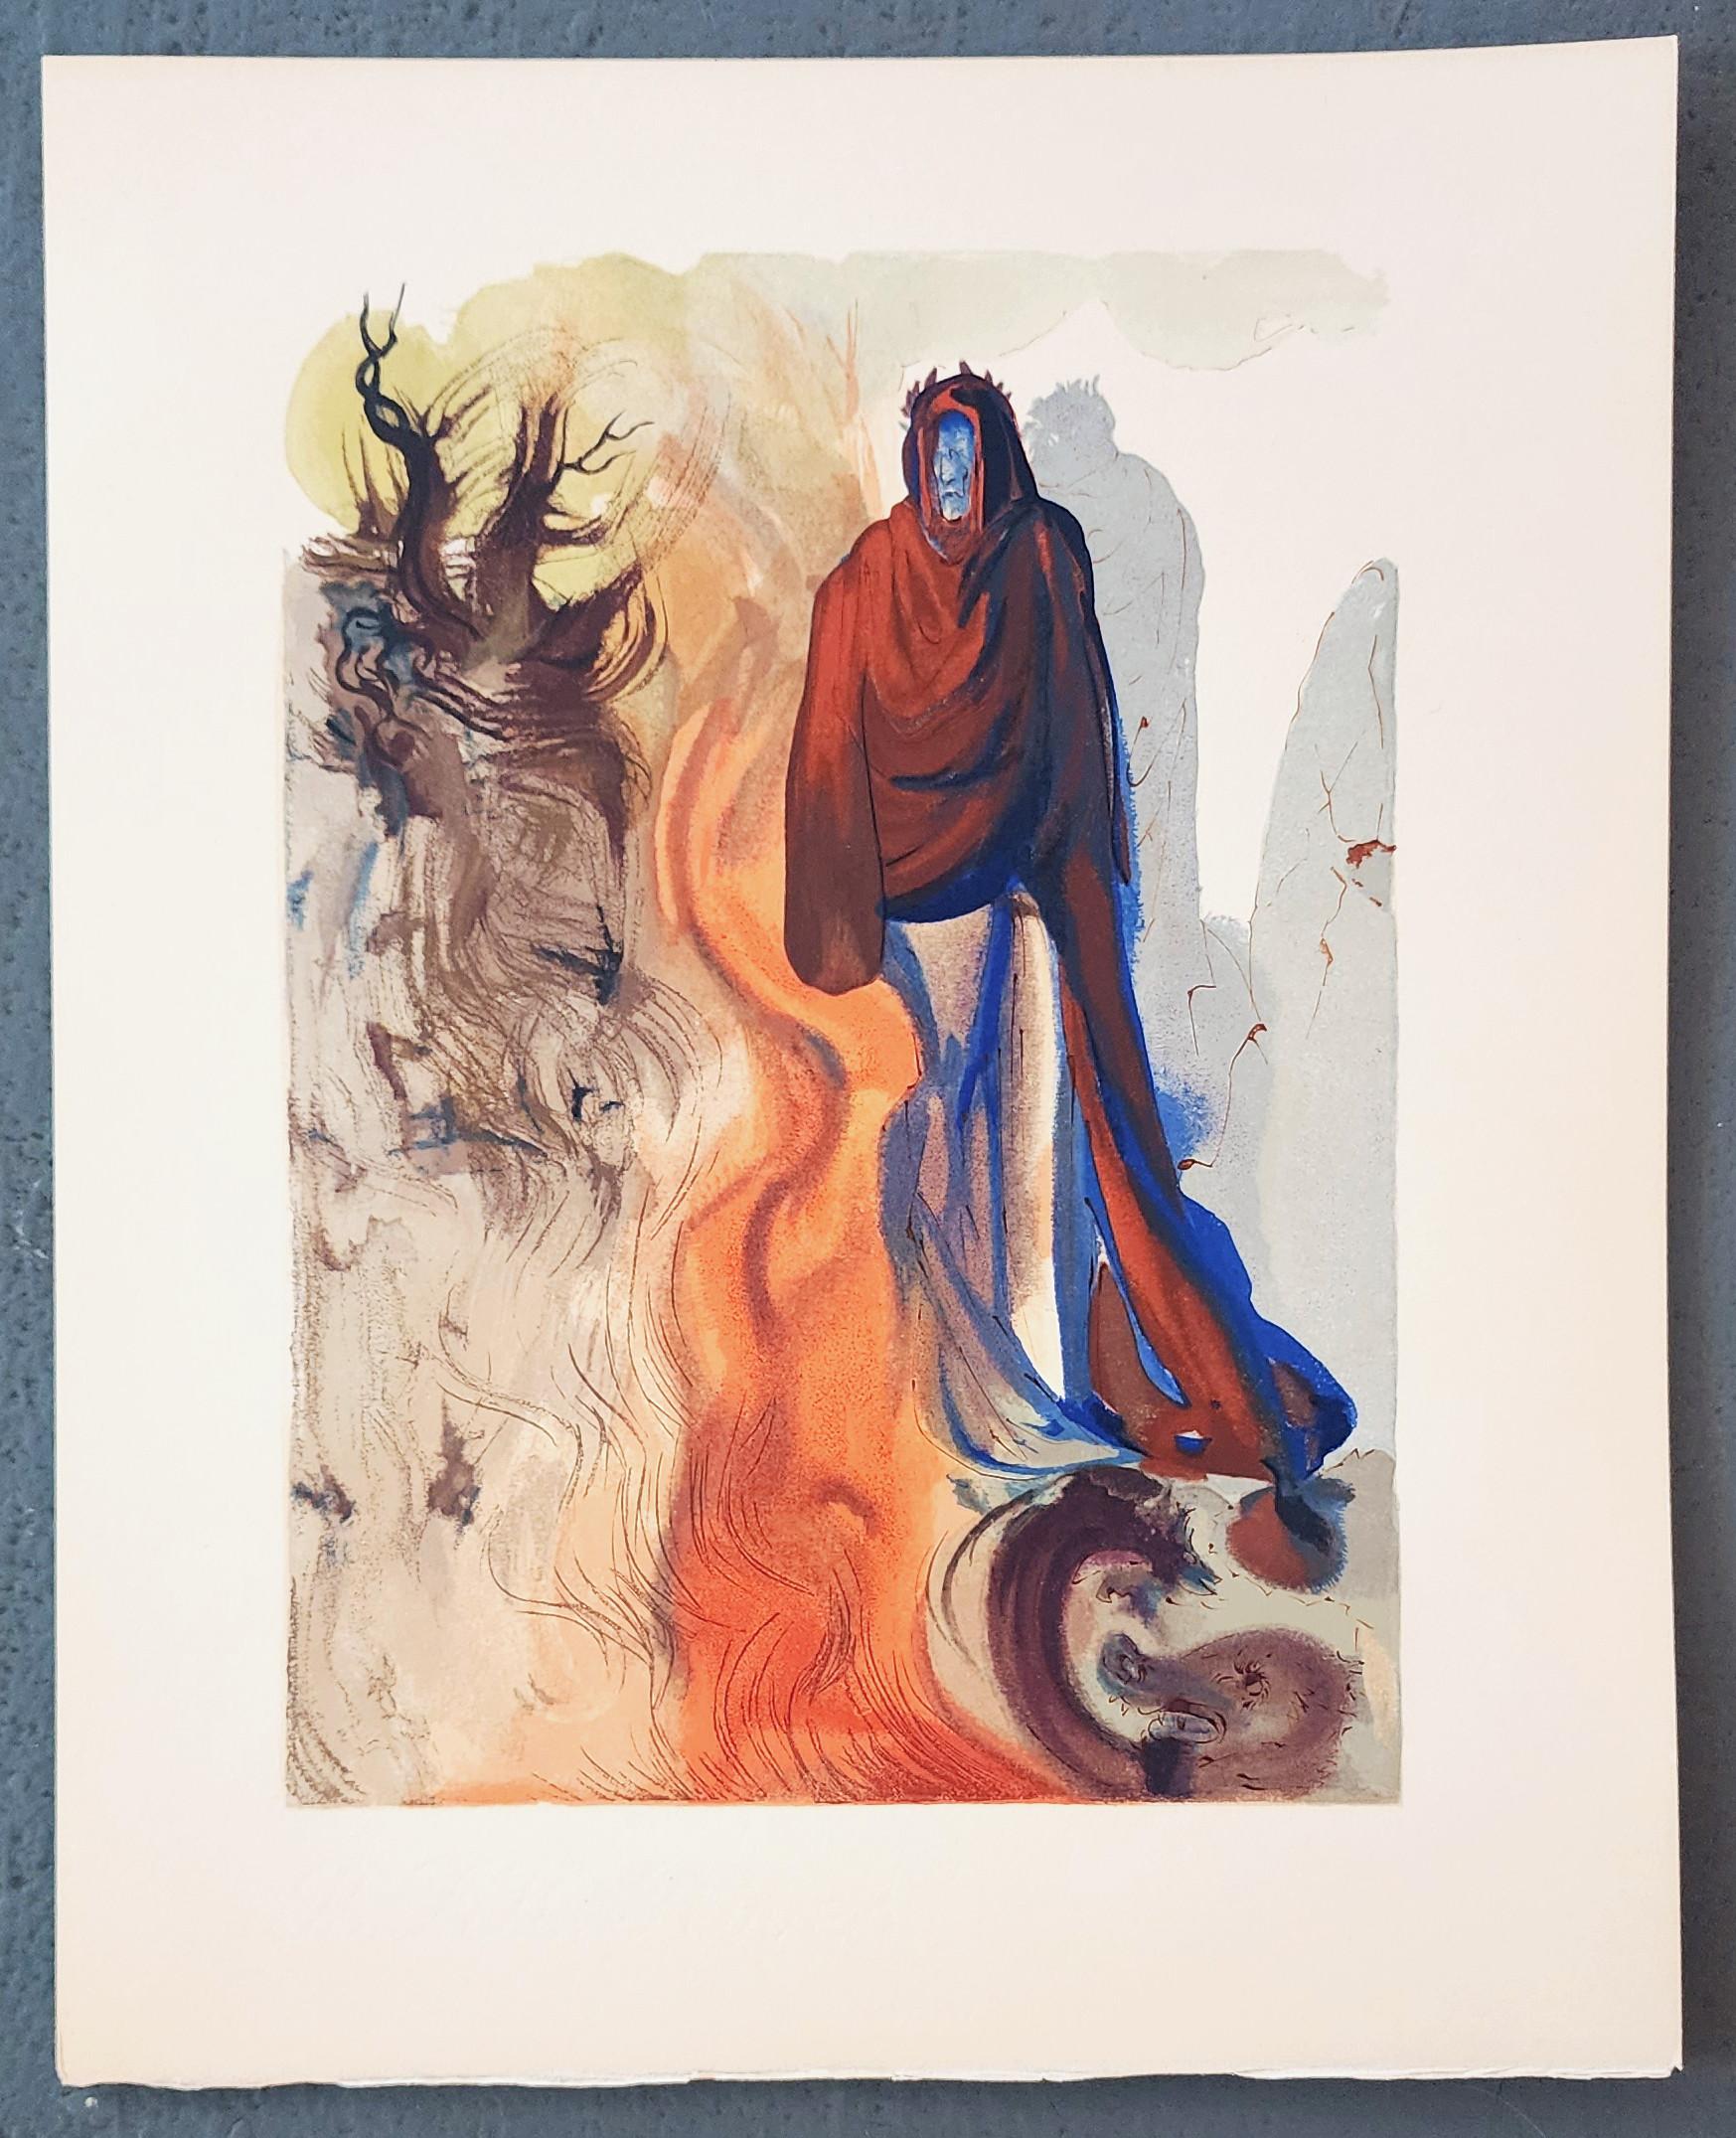 Apparition de Dite (25% OFF LIST PRICE & FREE U.S. SHIPPING) - Print by Salvador Dalí